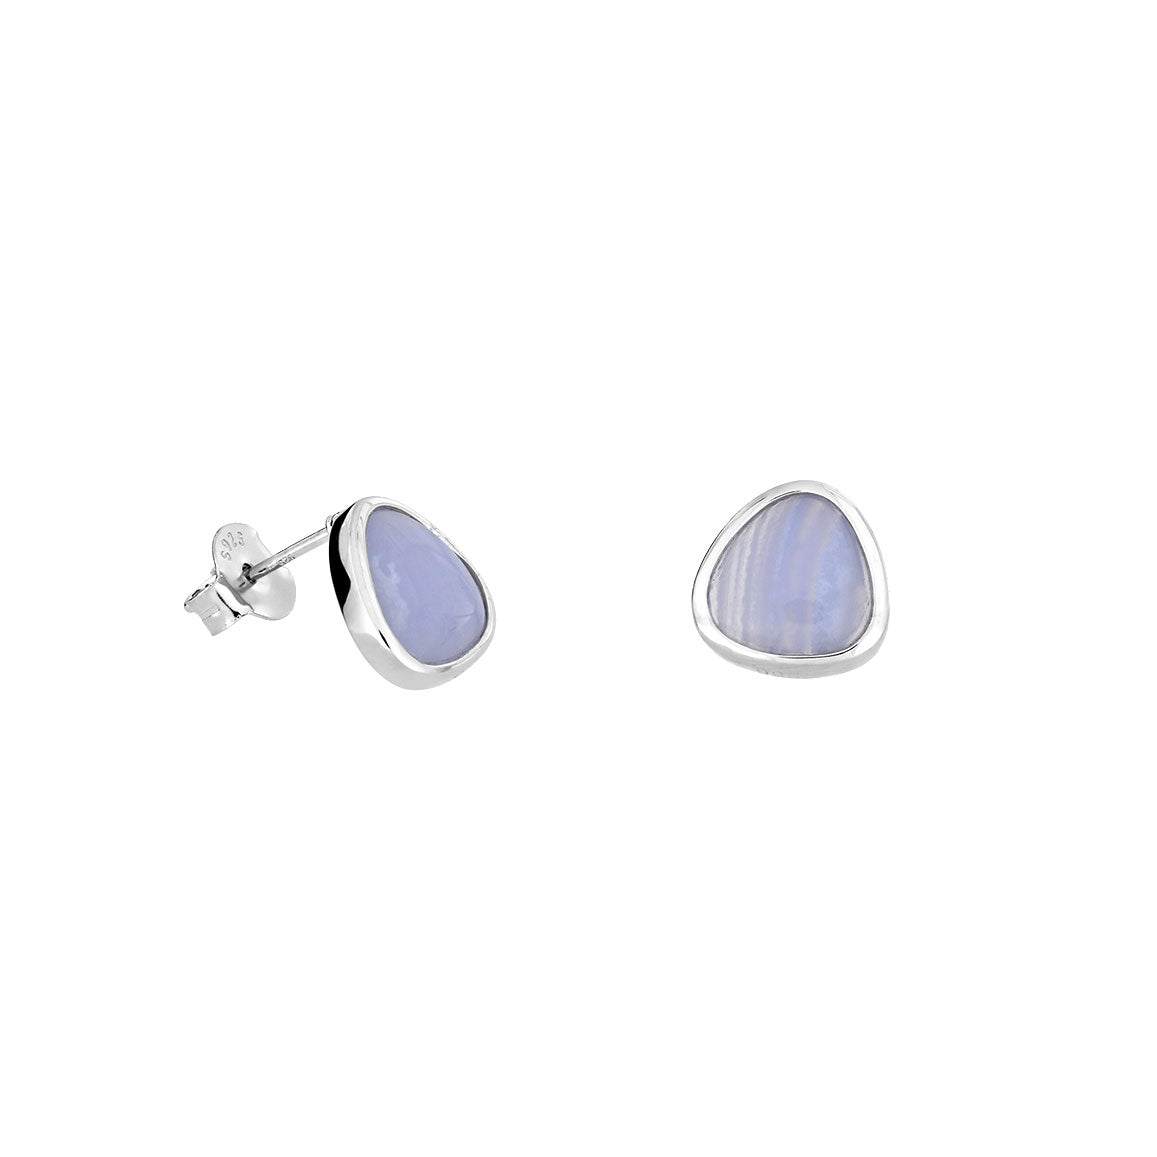 Blue Lace Agate & Silver Avalon Stud Earrings